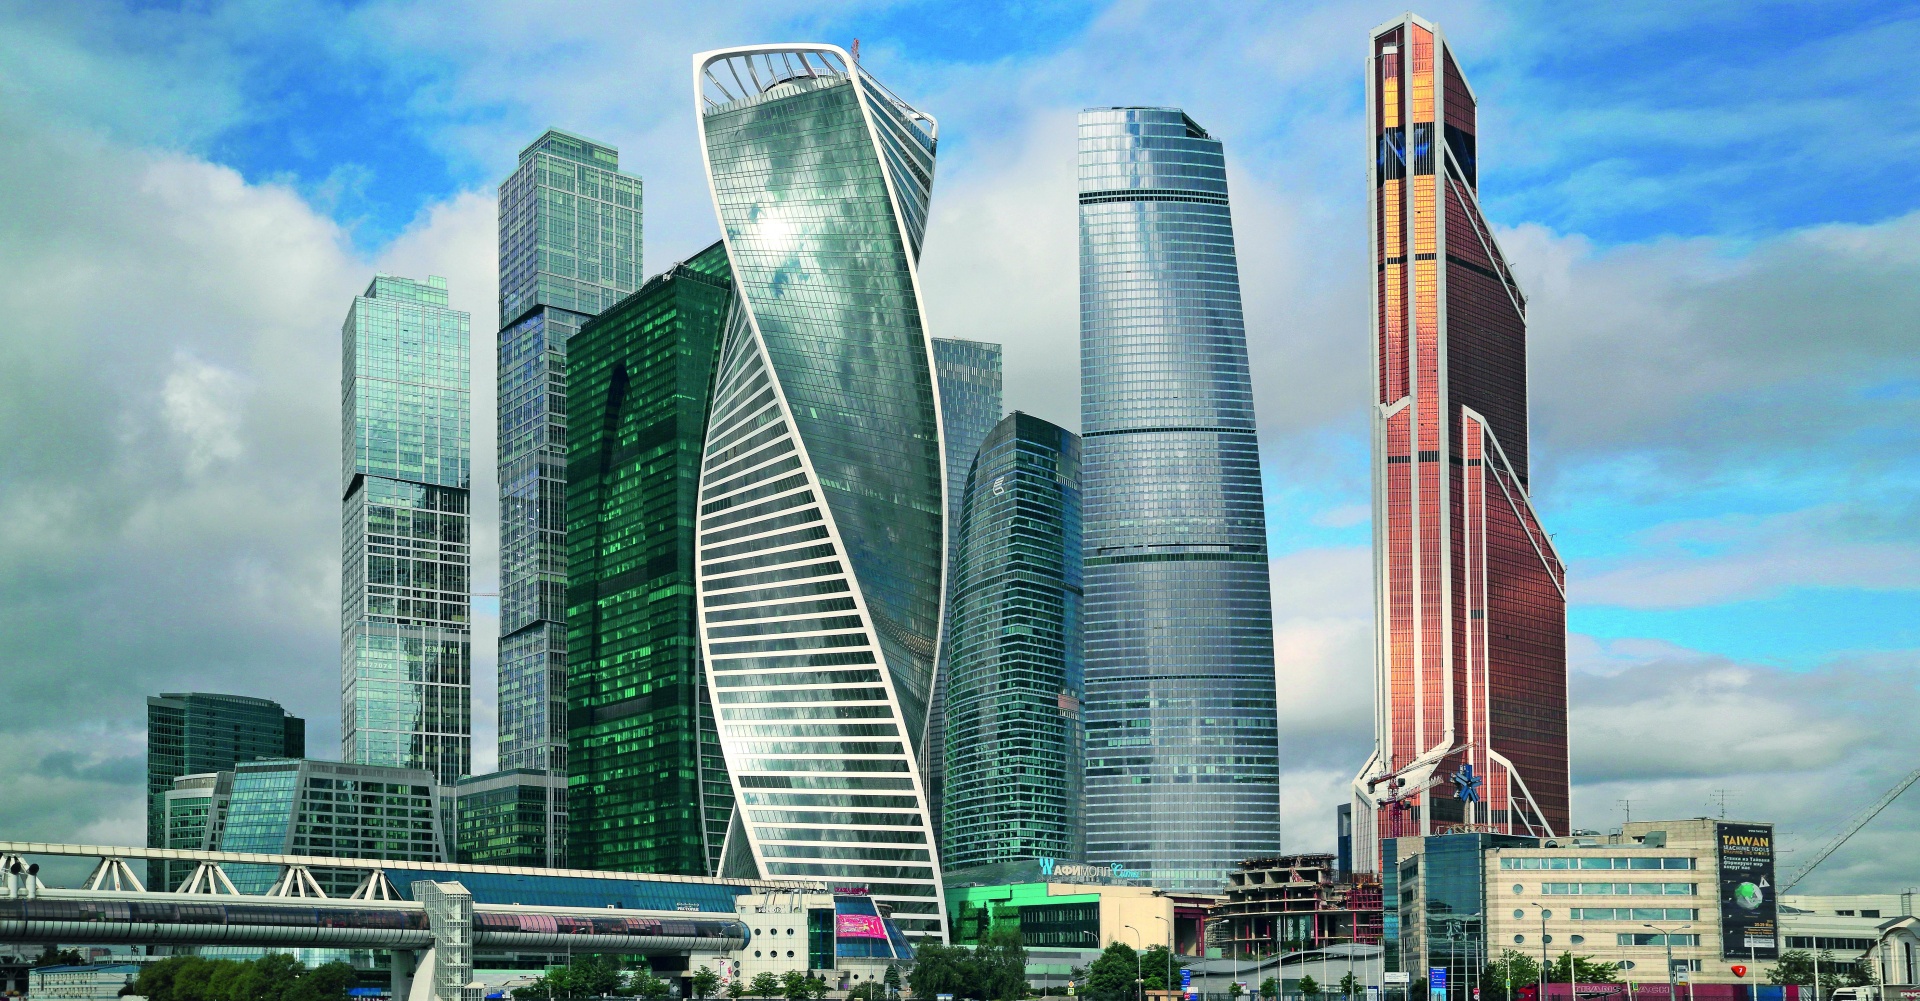 Revolution towers екатеринбург. Башня Транснефть в Москва Сити. Башня Эволюция Москва Сити. Башня Эволюция Транснефть. Башня Эволюция Москва Сити Транснефть.